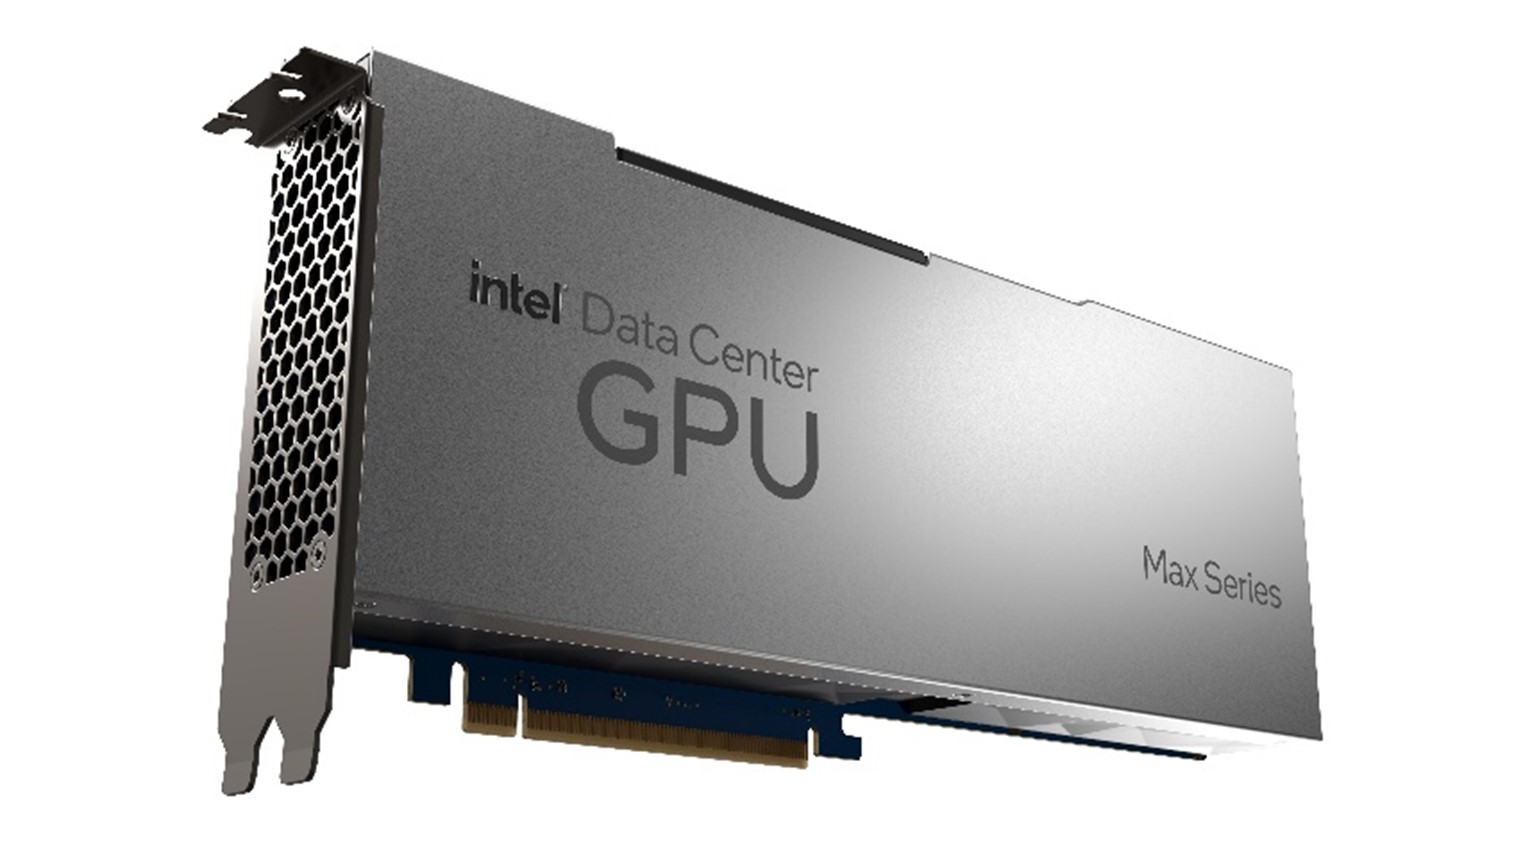 Intel Data Center GPU Max series for high-performance computing and AI